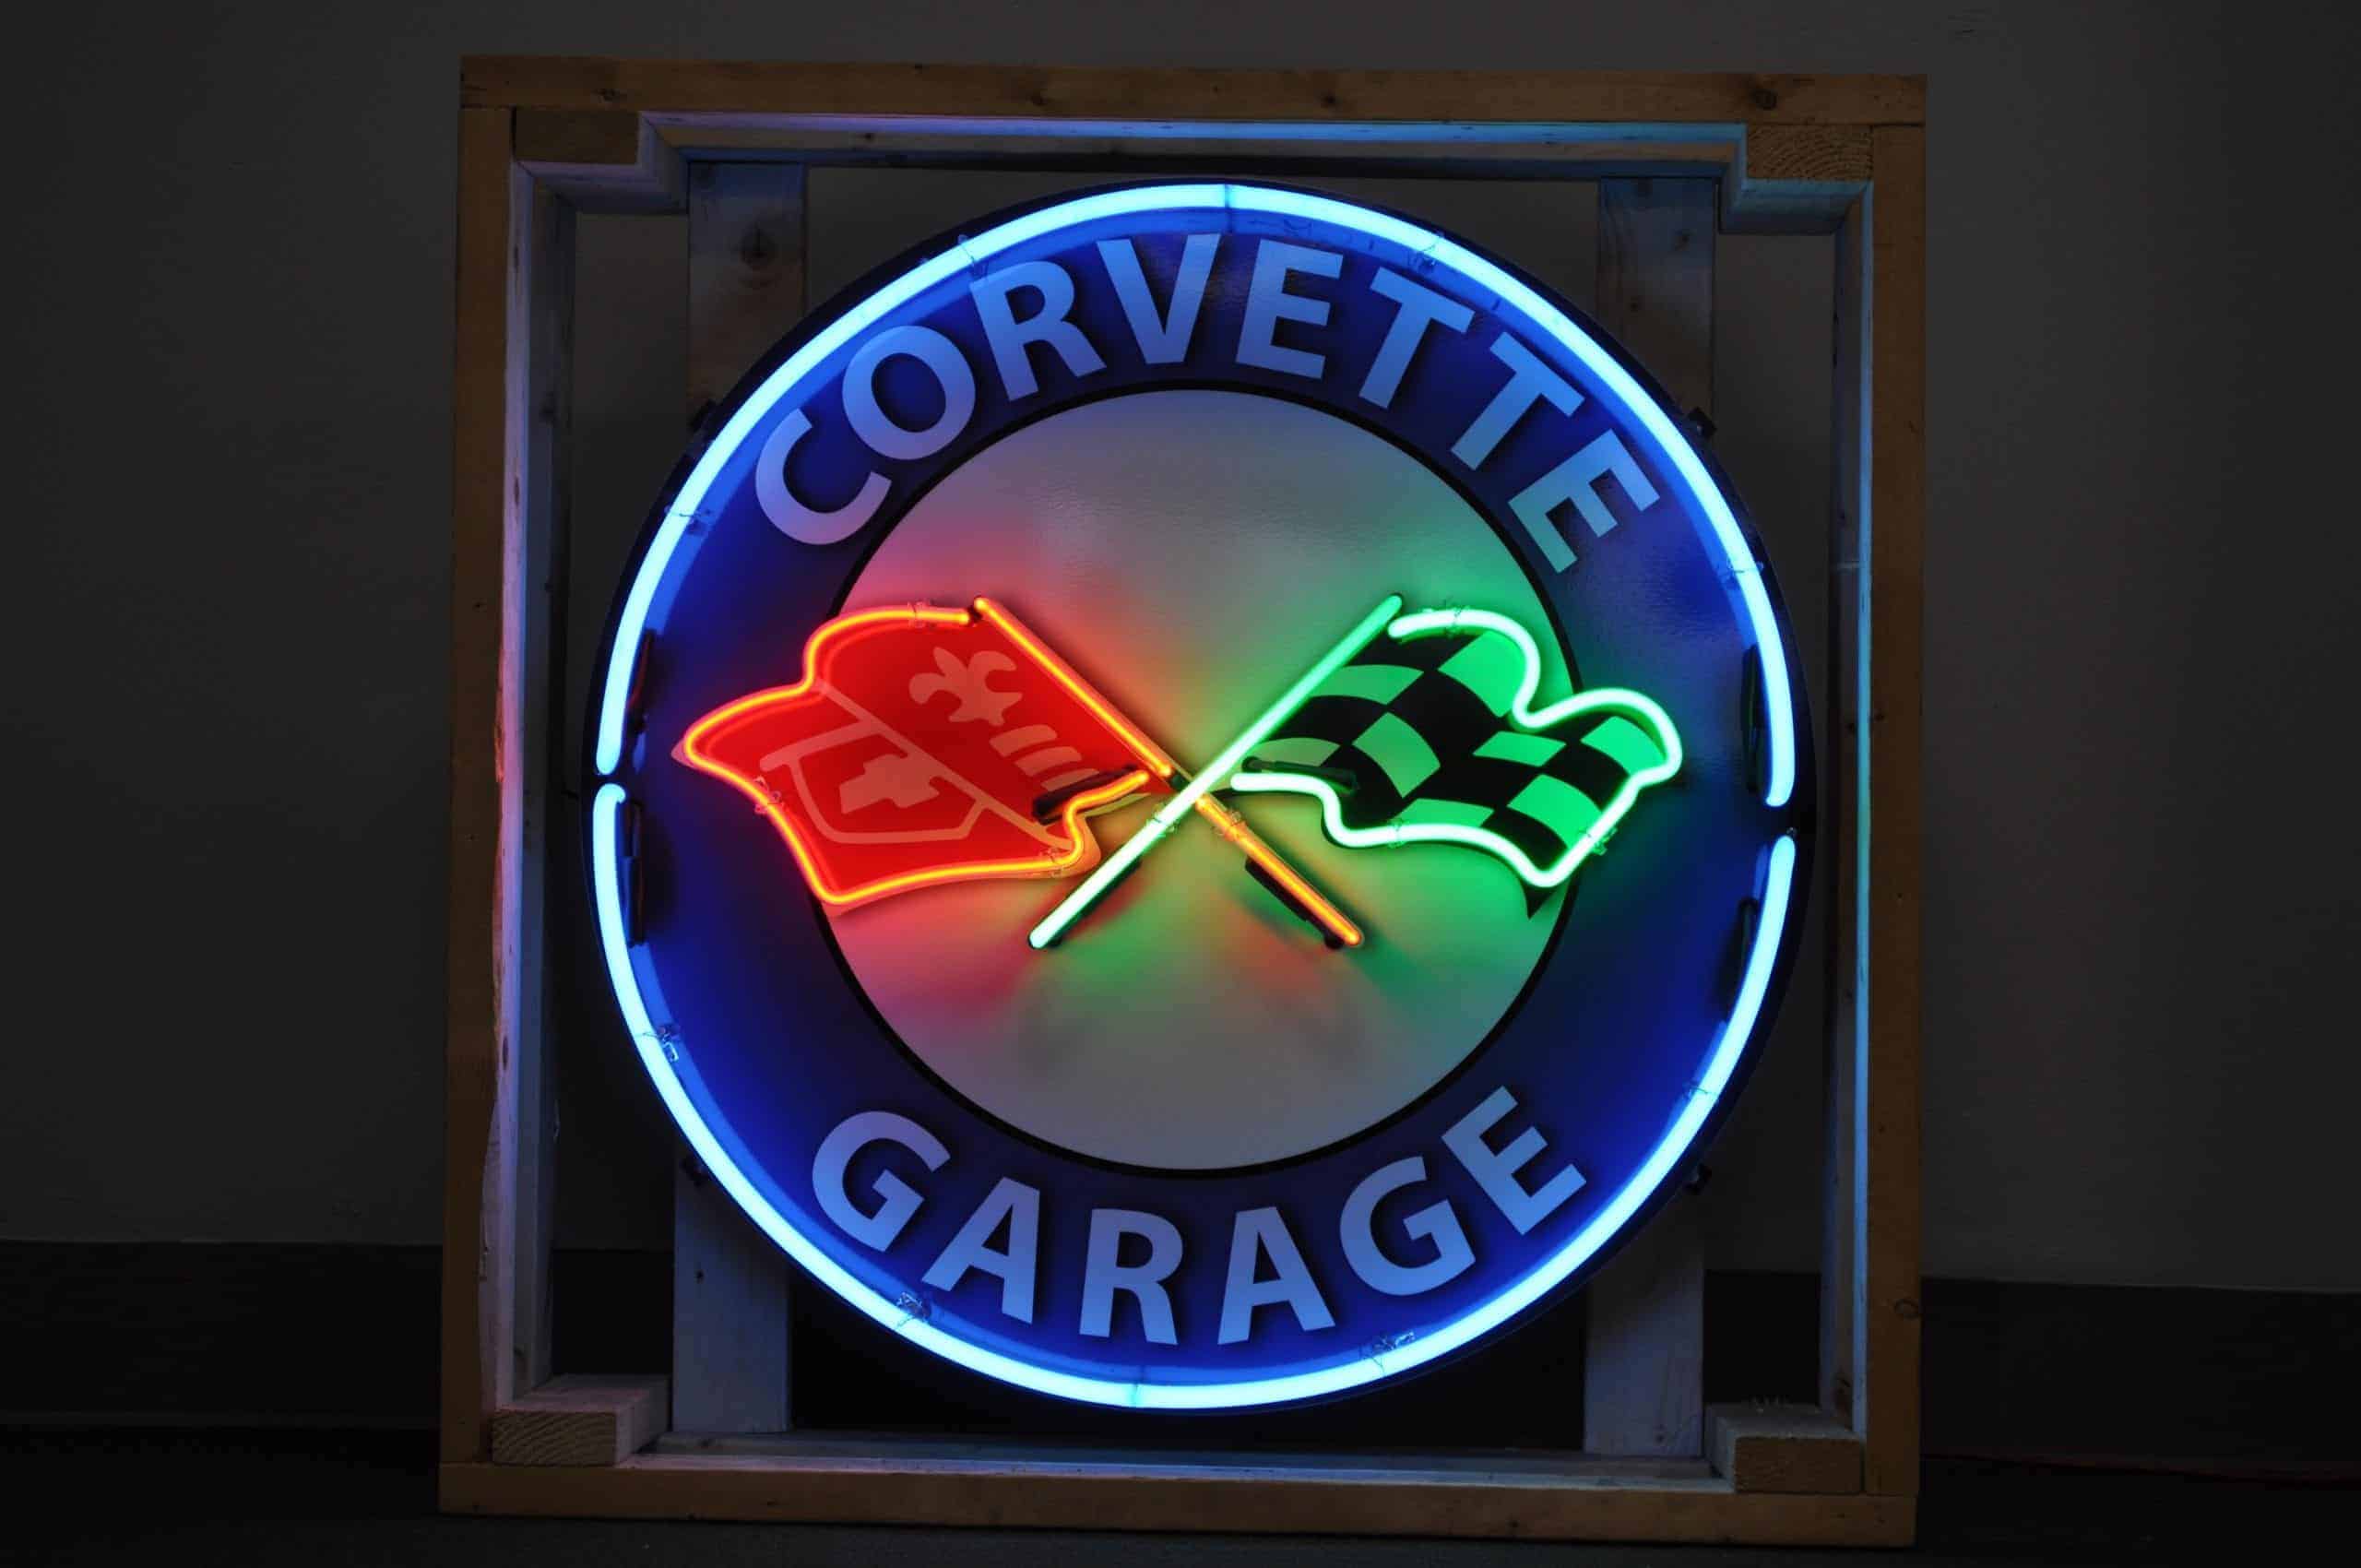 Corevette Garage Neon